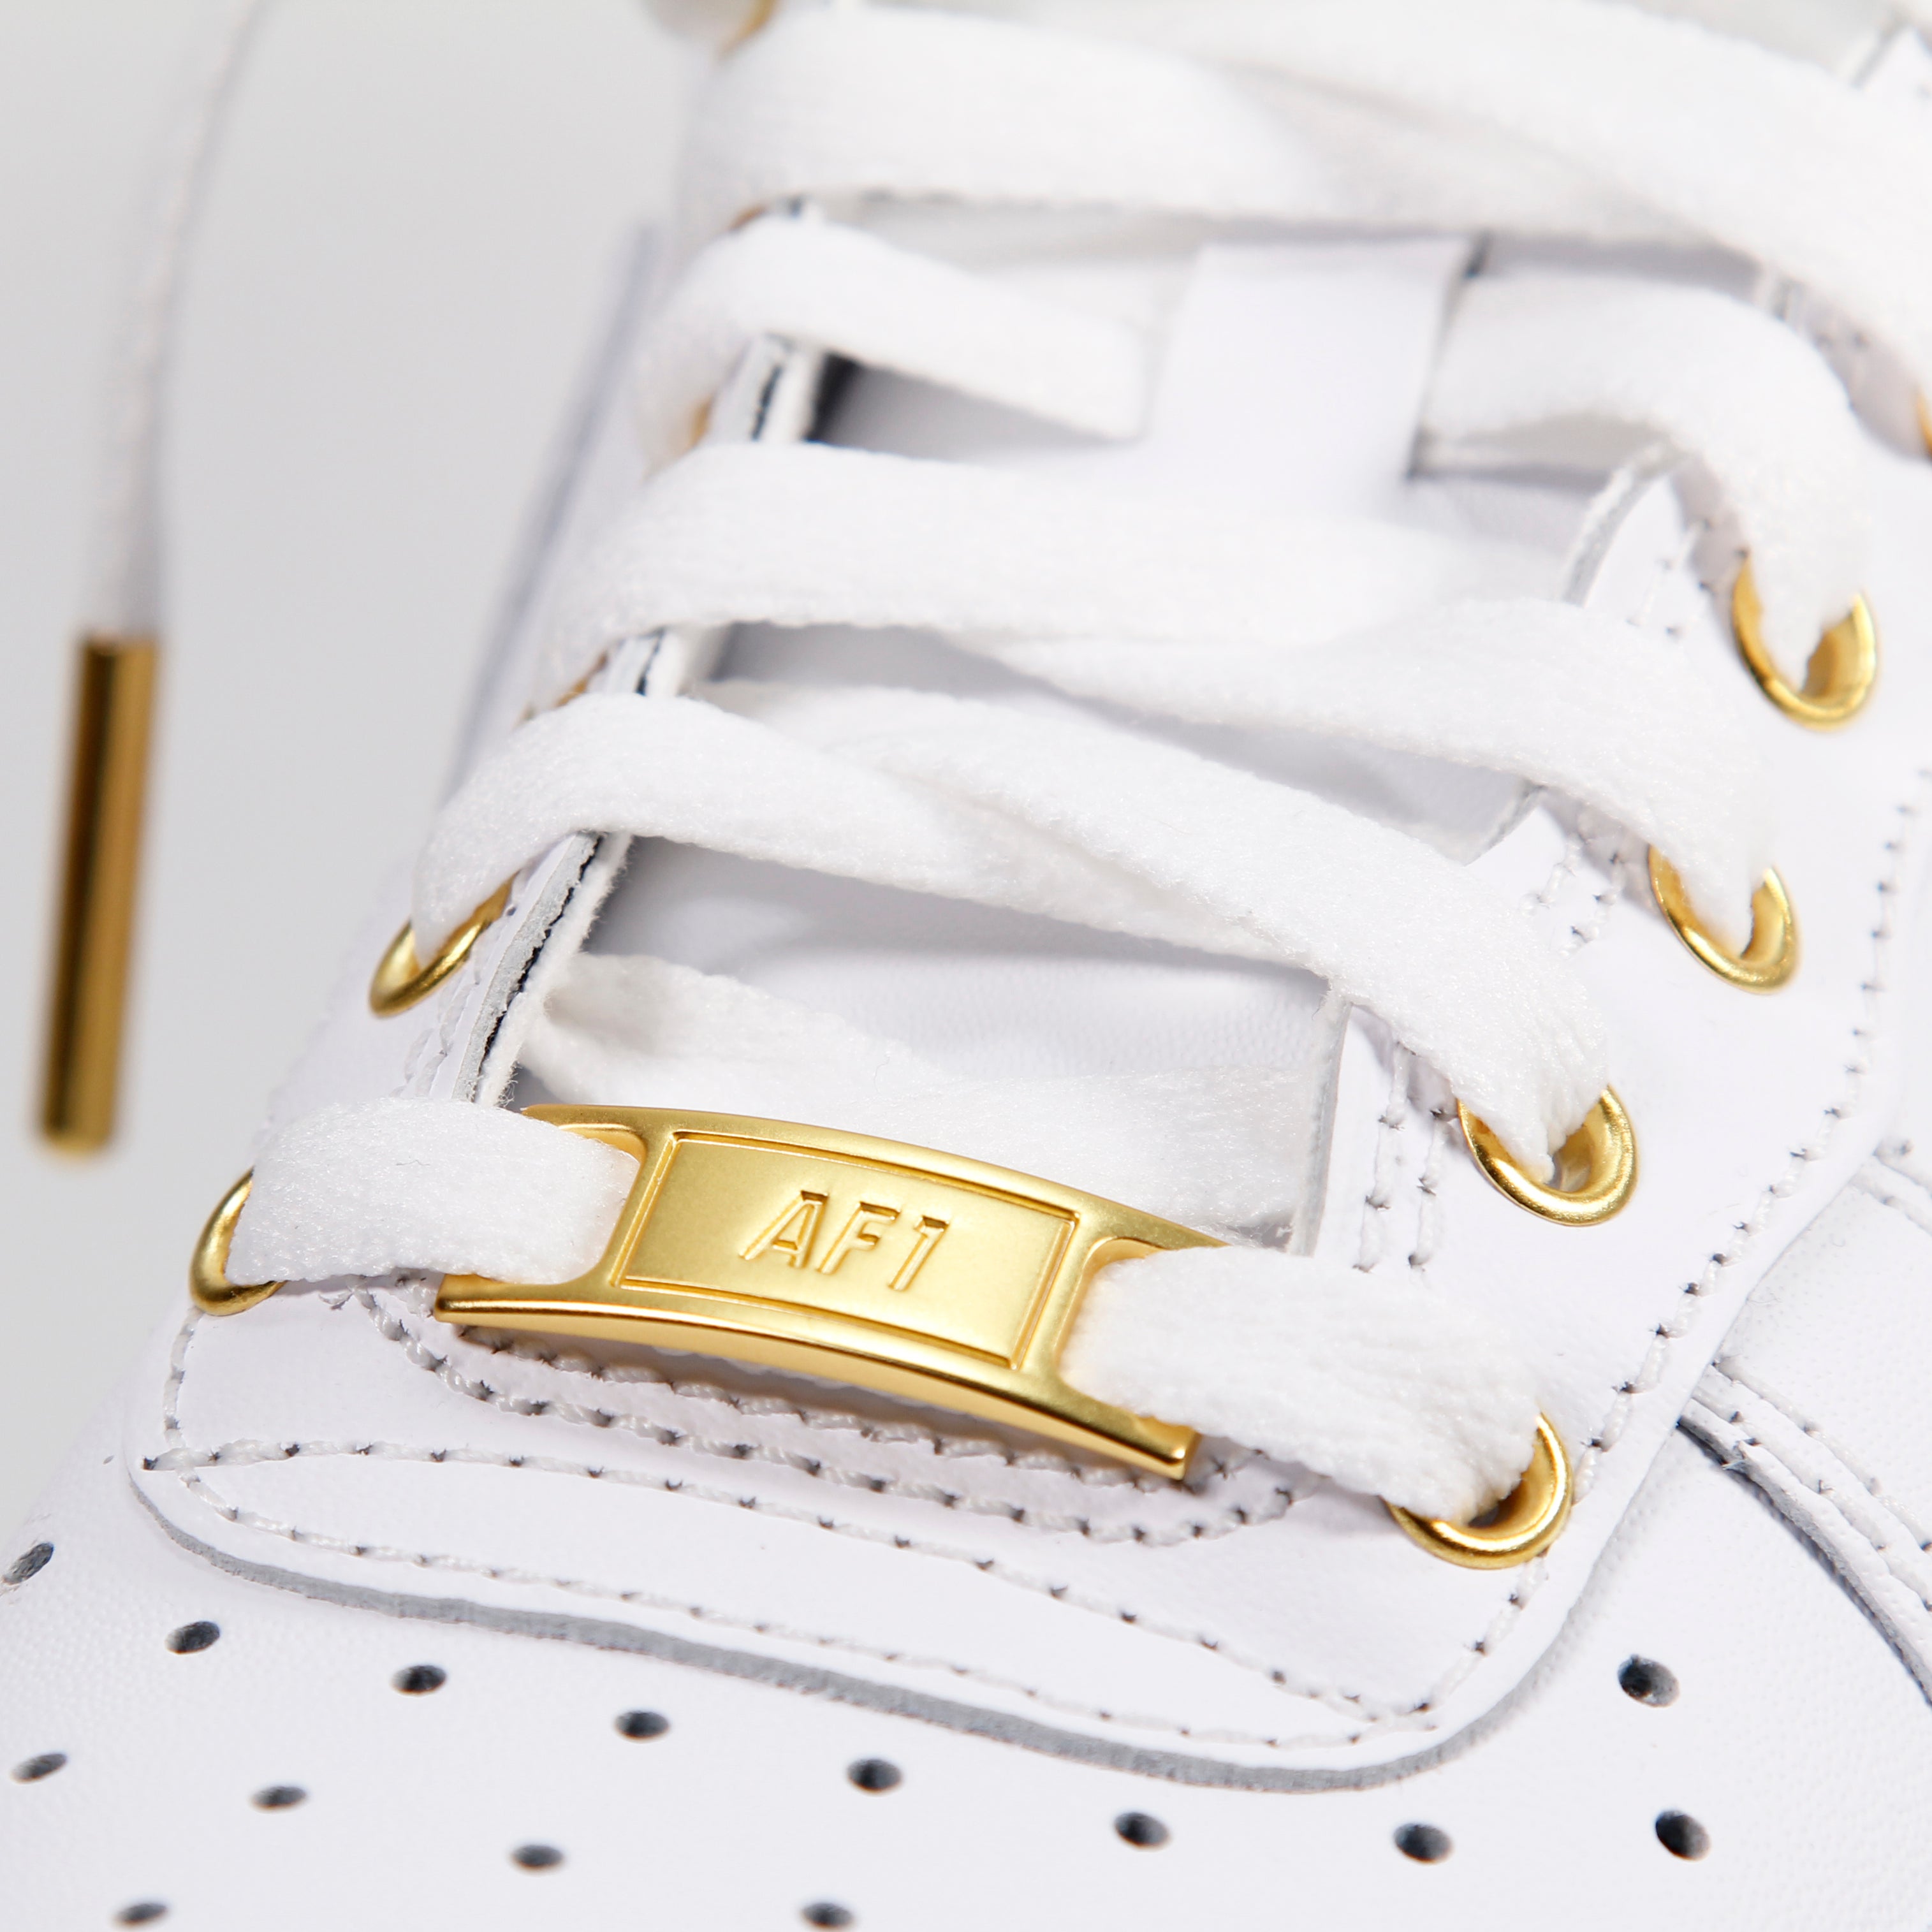 Nike Custom Air Force 1 Metallic Gold Bronze Outline Shoes Sneakers Mens  Women